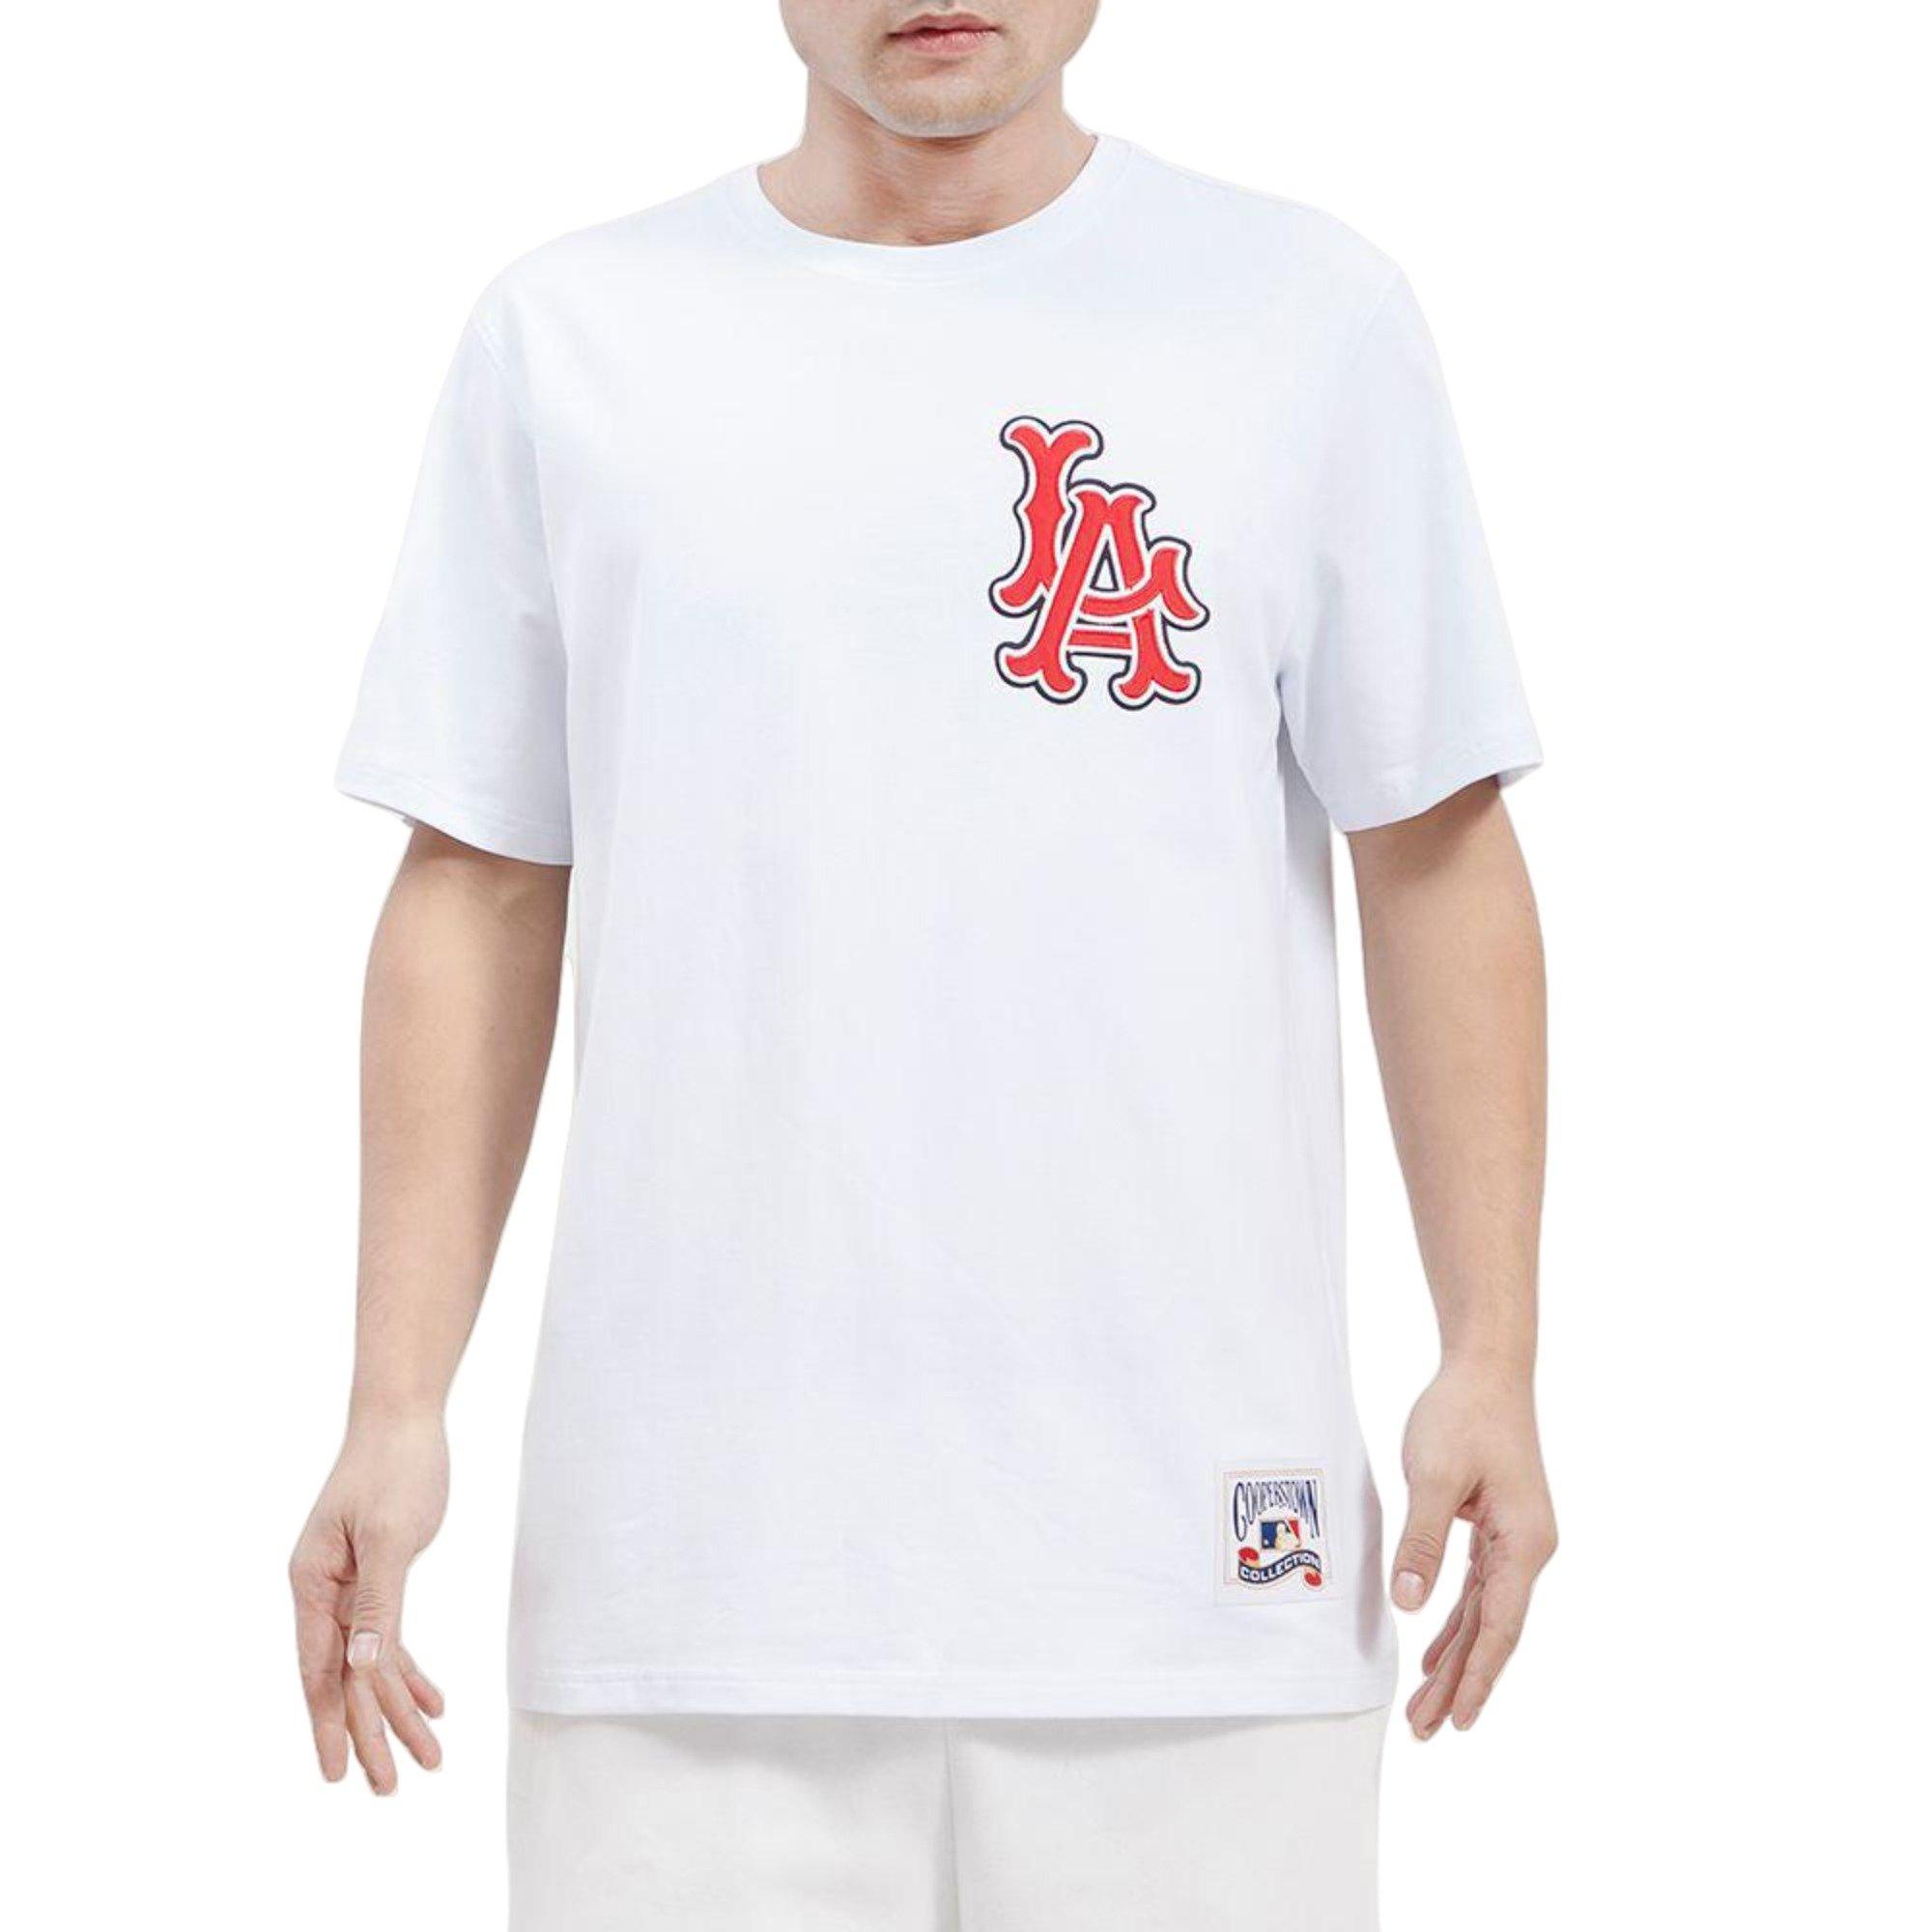 LA DODGERS T-Shirt Men's T-Shirt White Size Medium NWT